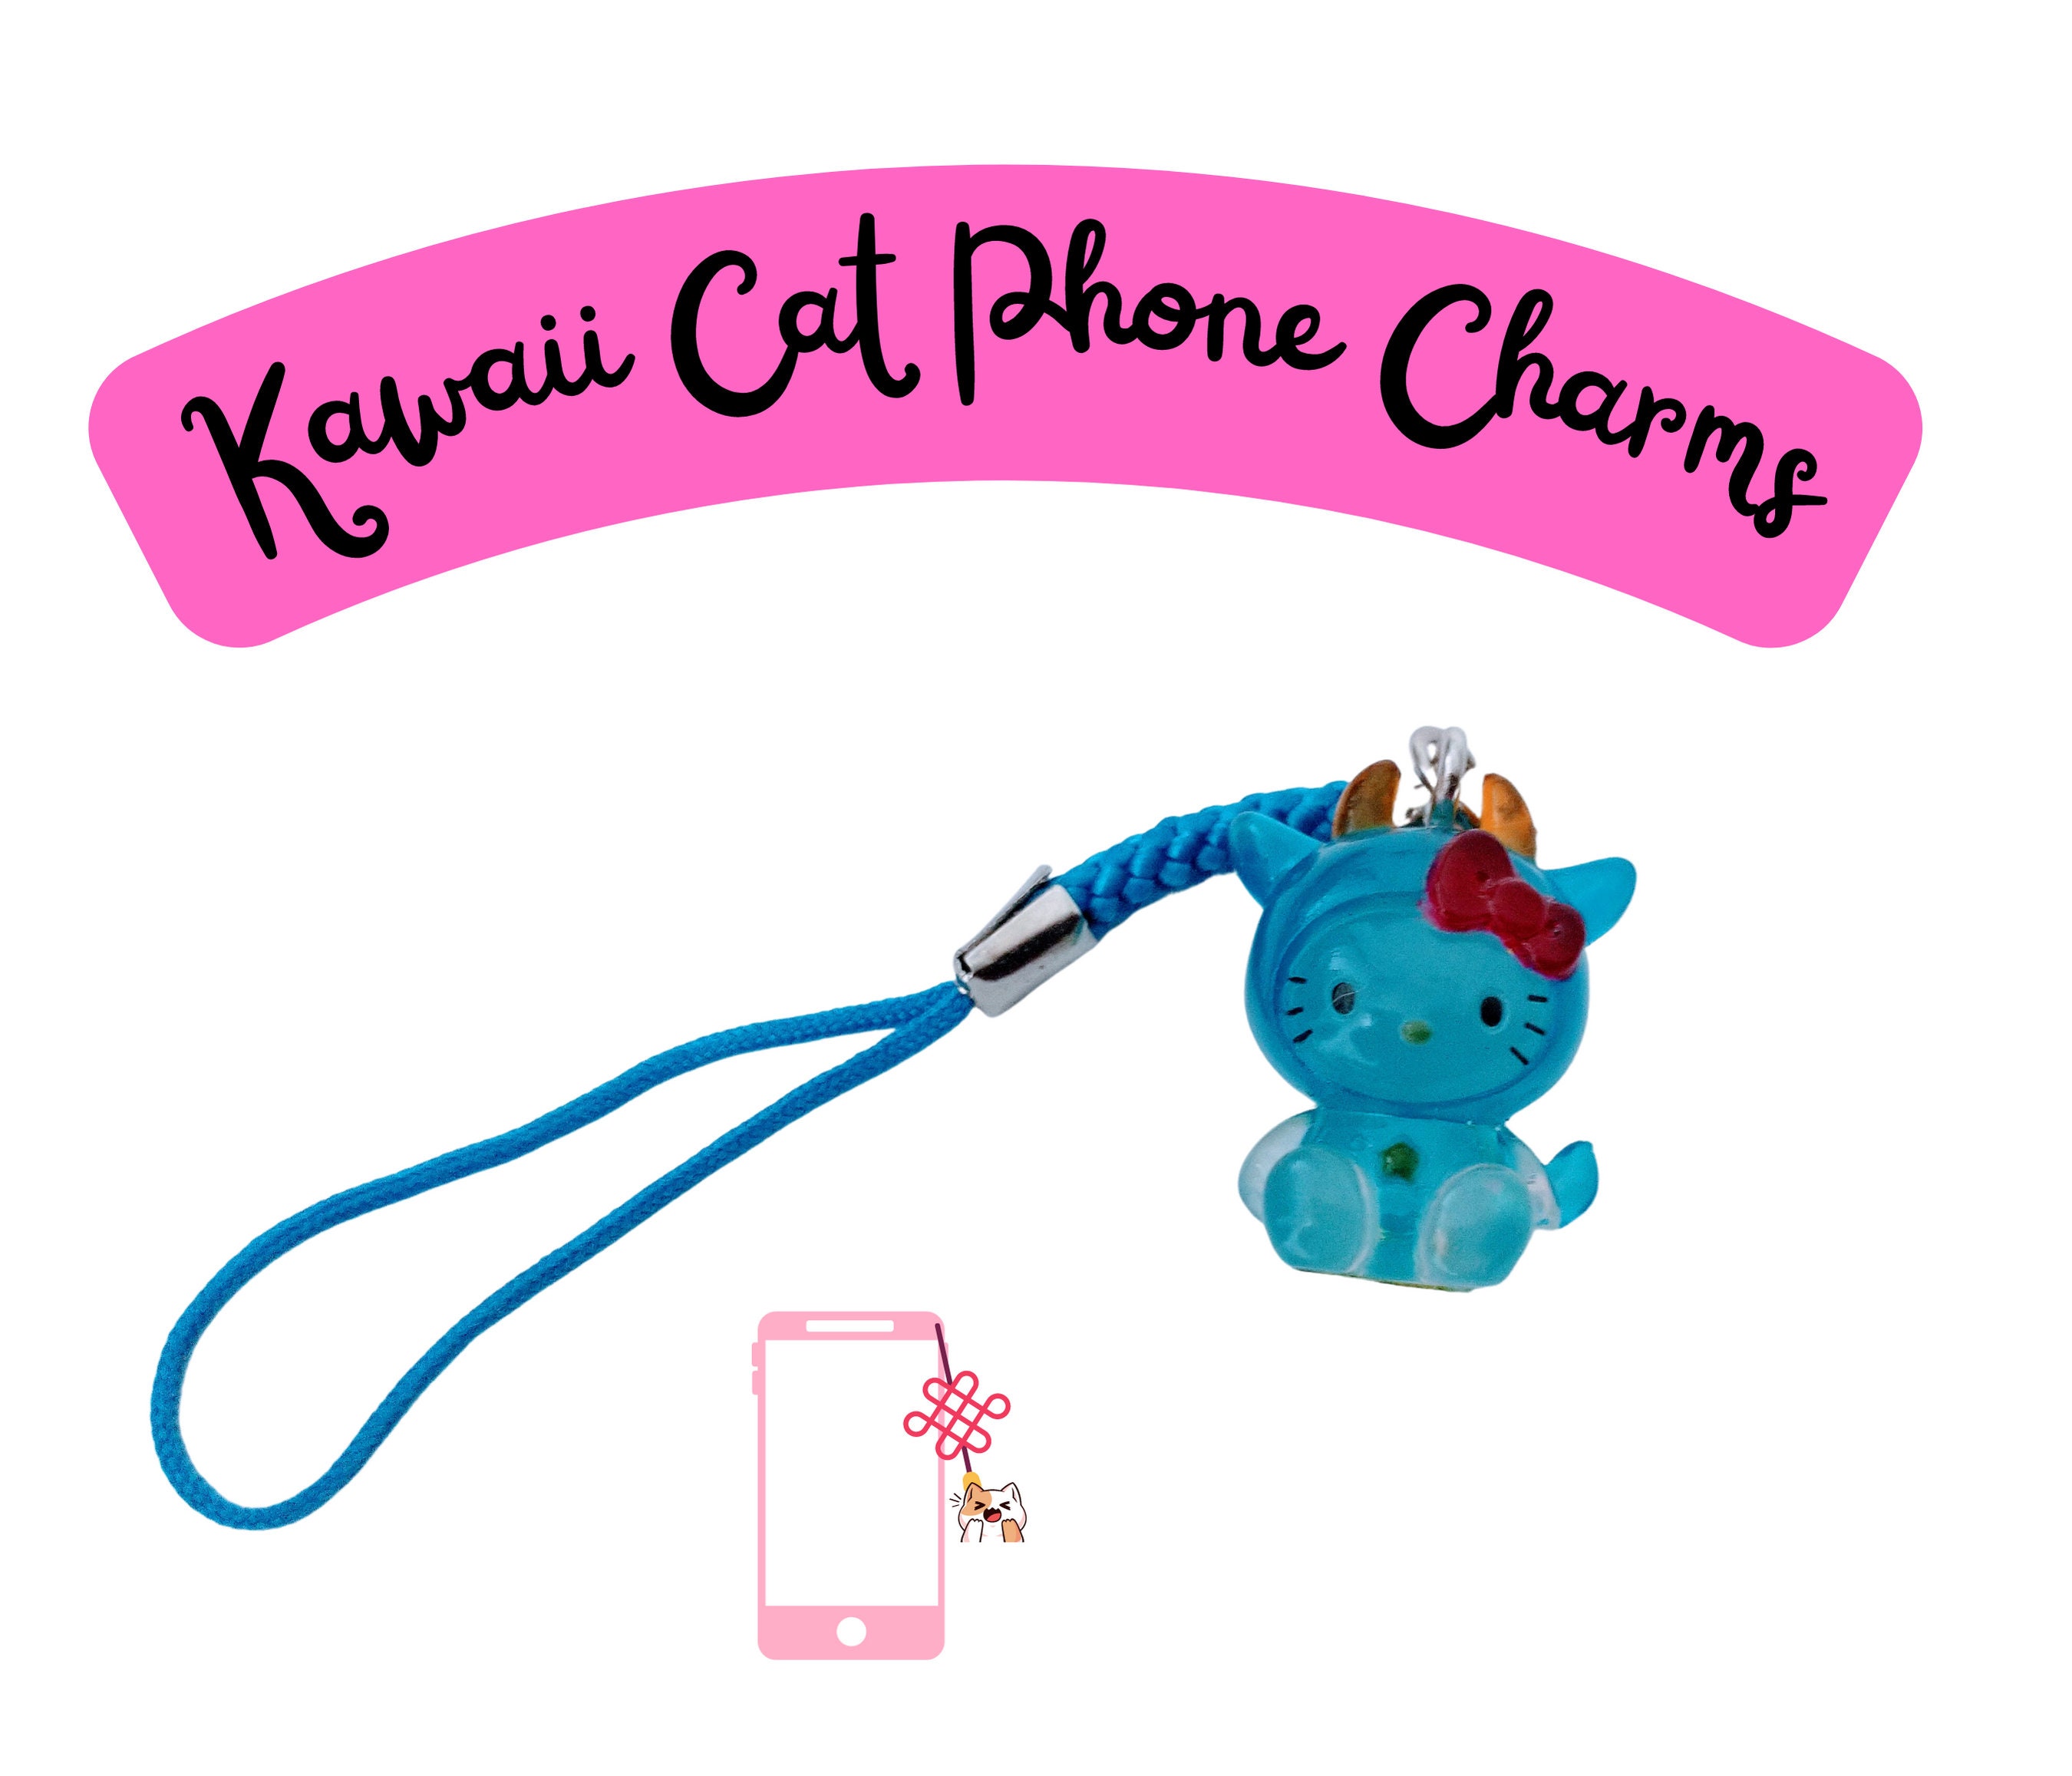 Hello Kitty ANGELS Baseball Cell Phone Charm Genuine Merchandise